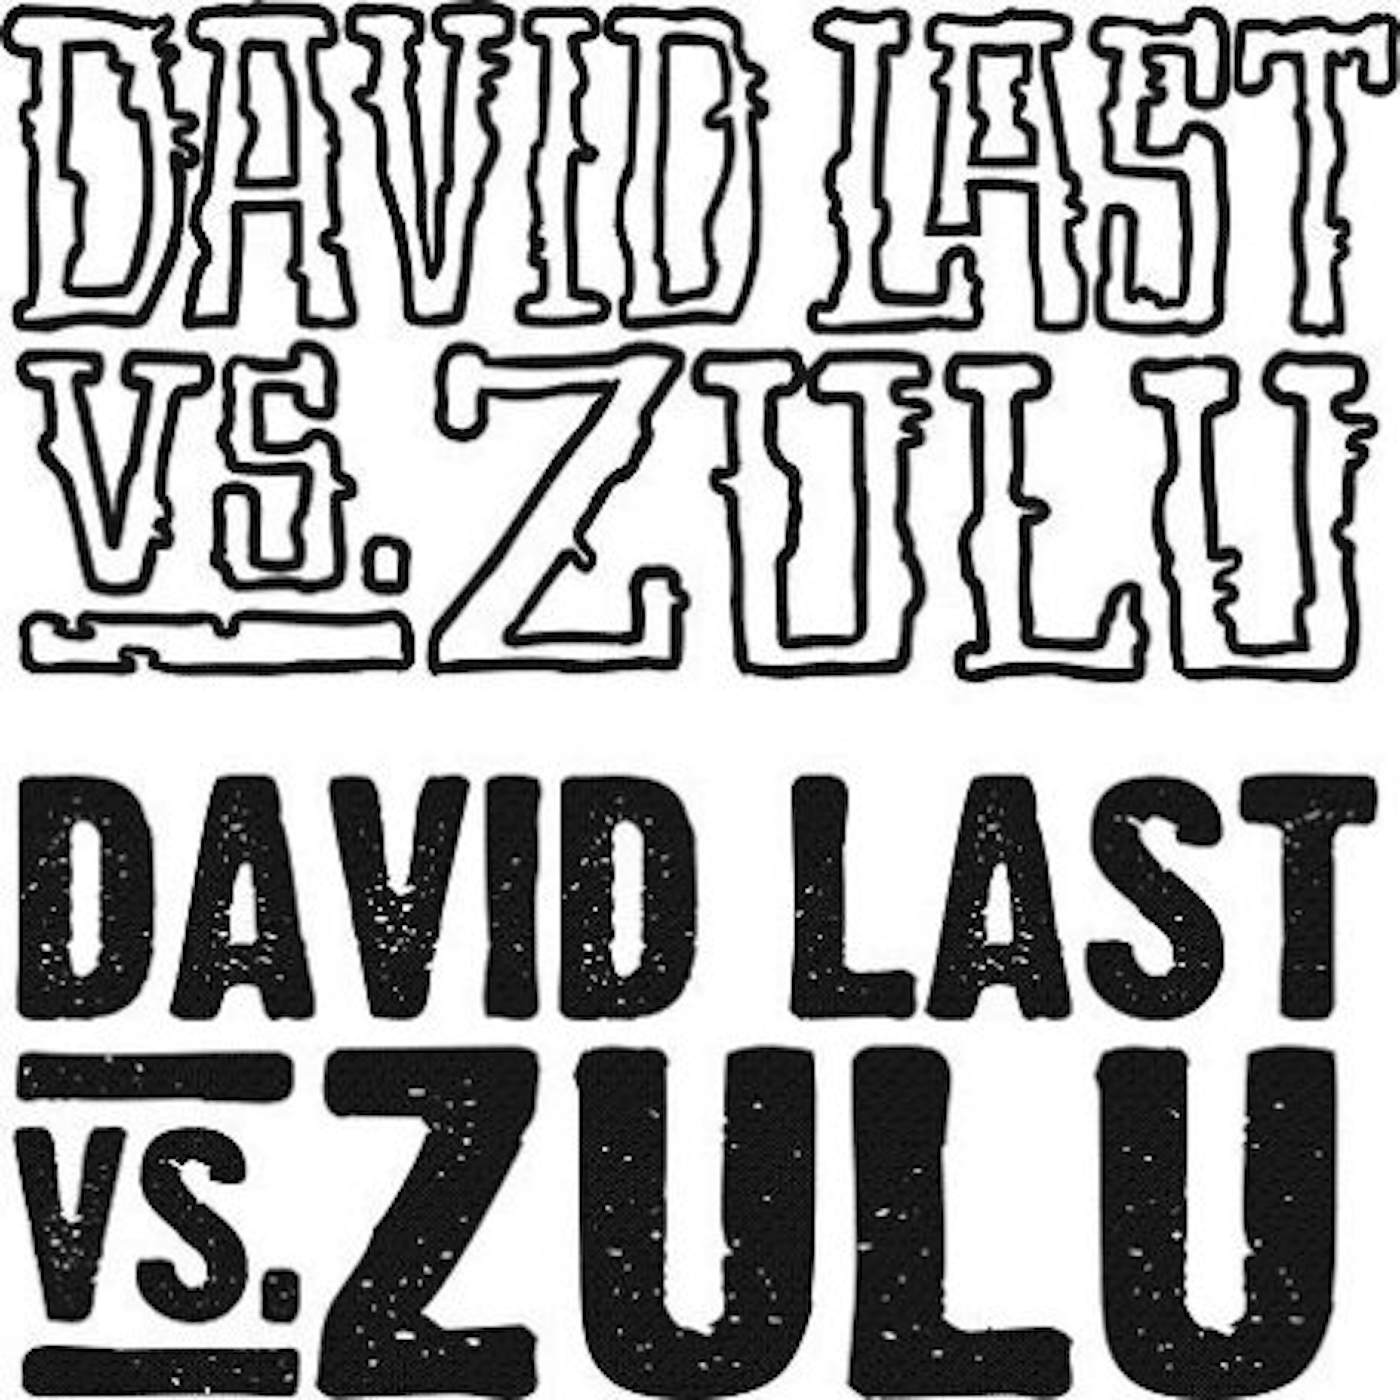 David Last vs. Zulu Musically Massive Vinyl Record